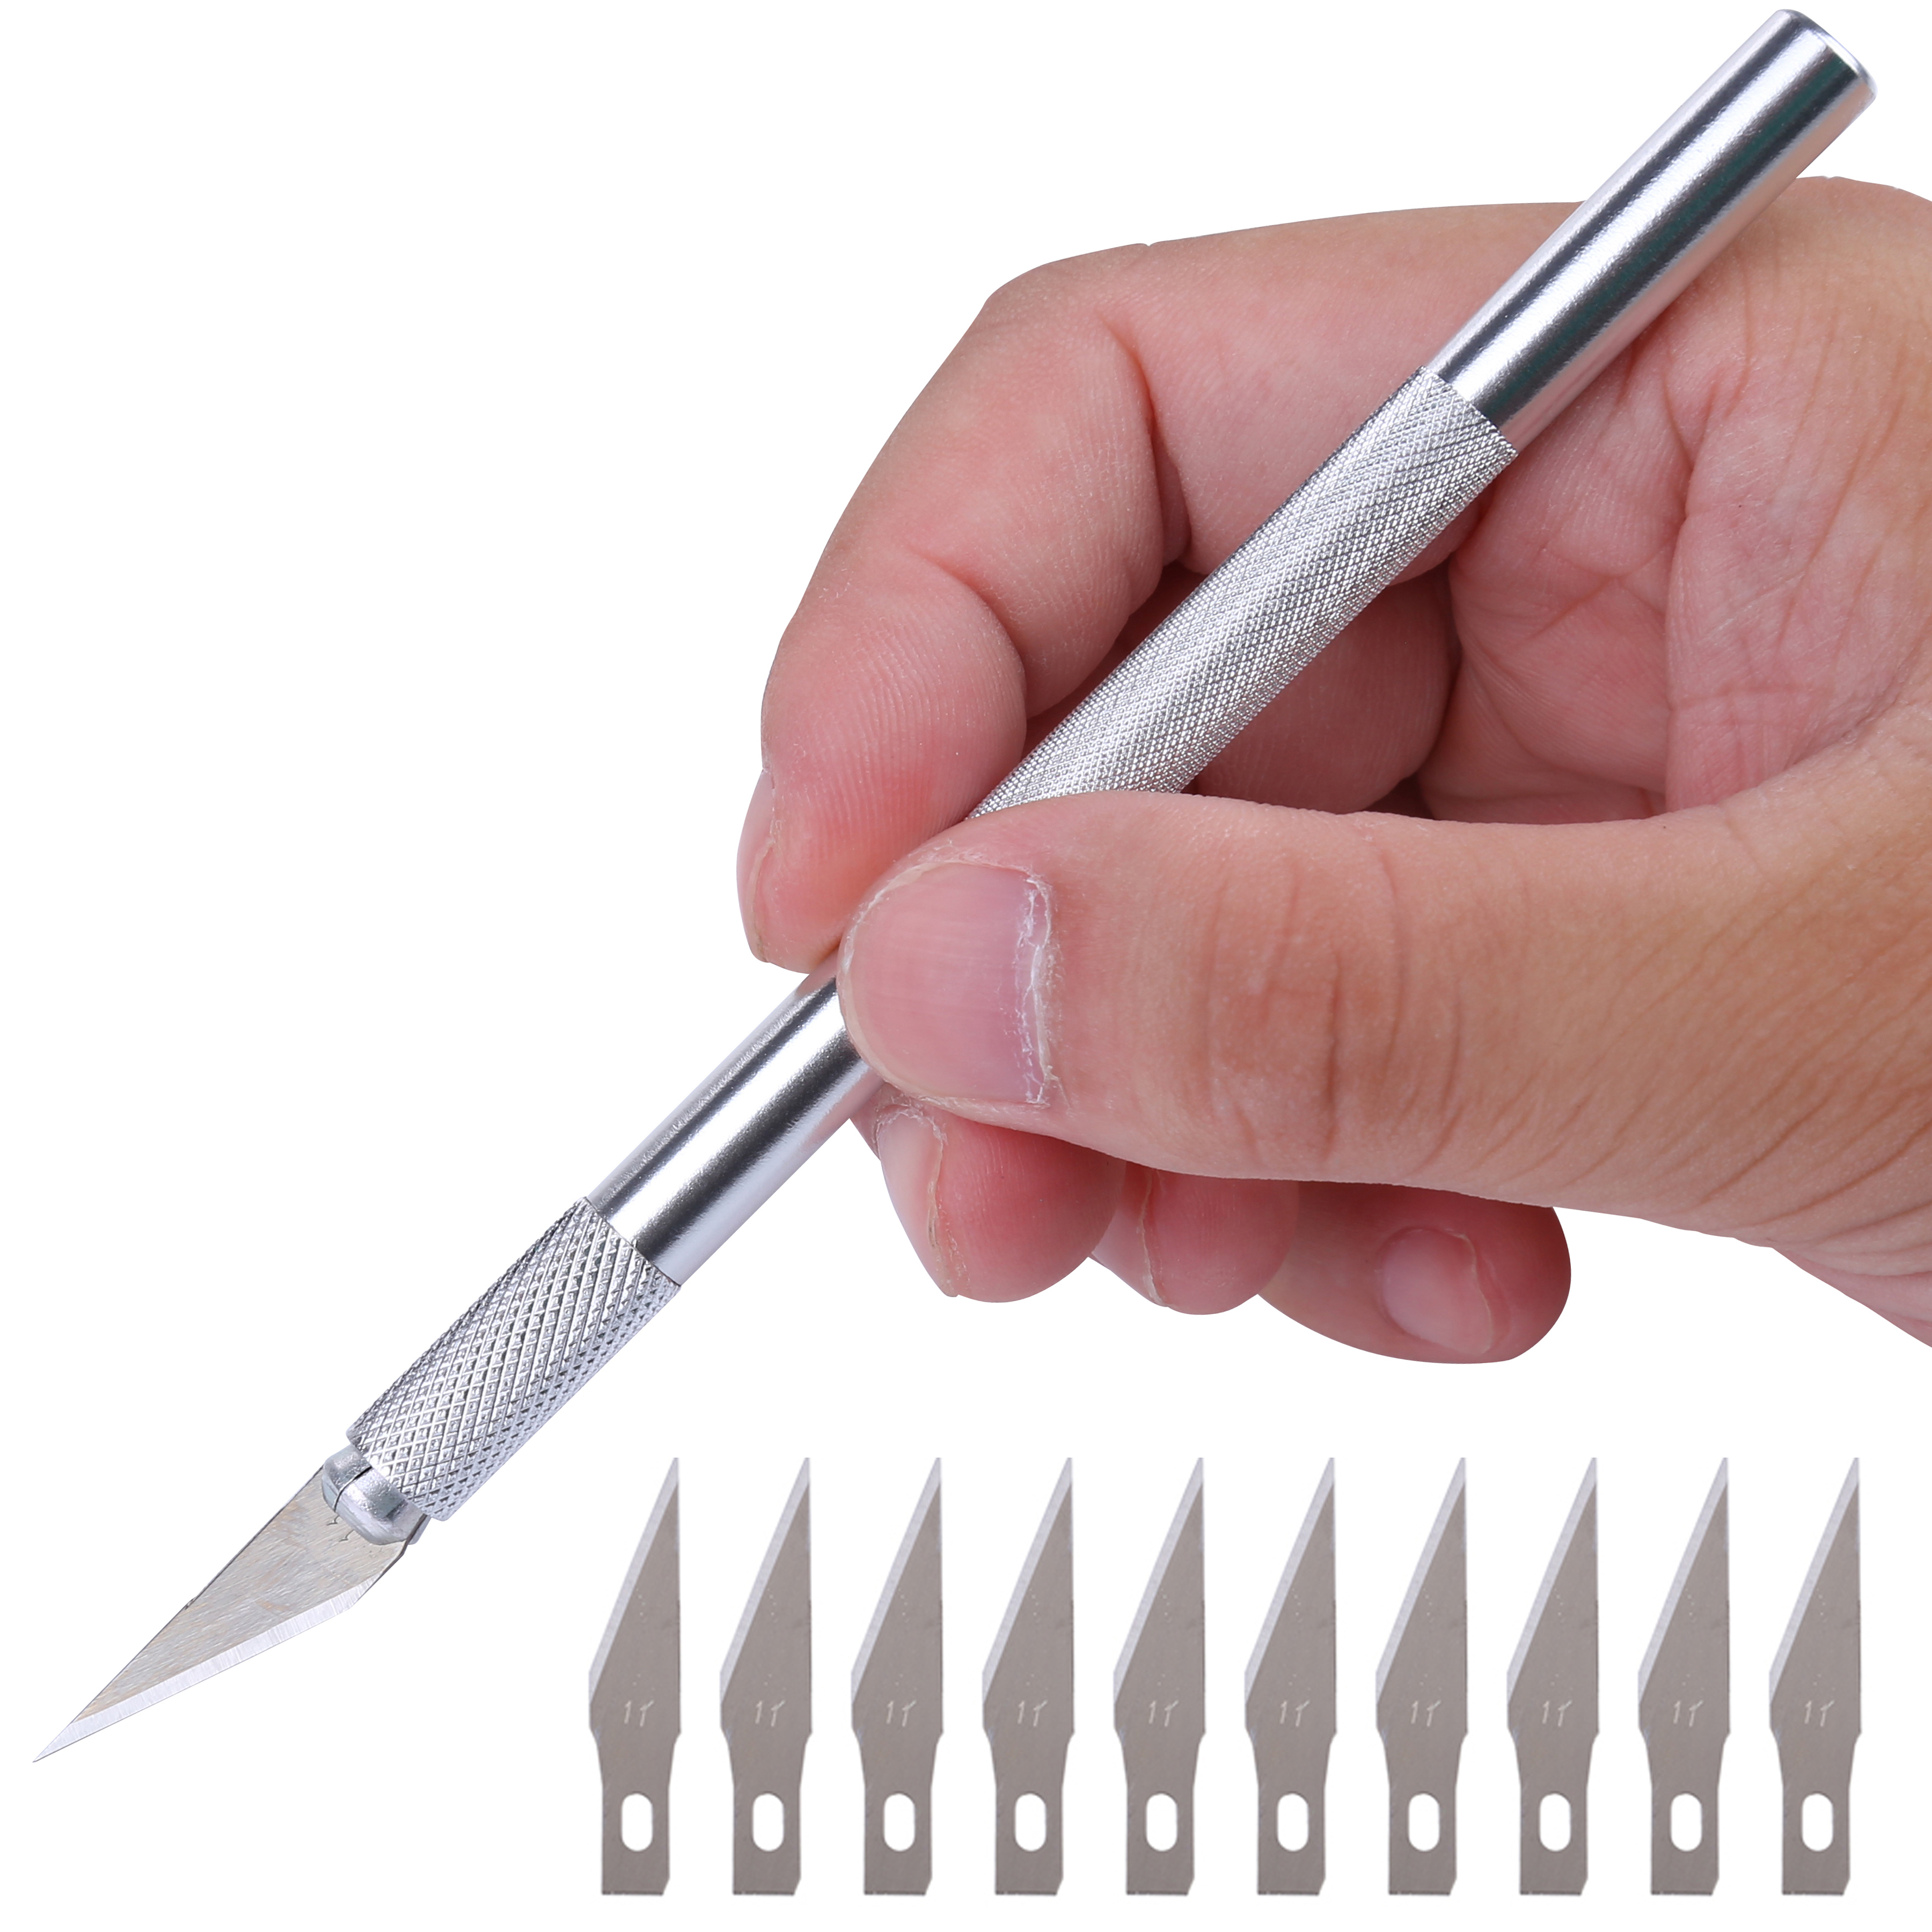 12pcs/lot Carving Knife Craft Artwork Cutting Engraving Knife DIY Stencil Scoring Model Repairing Sculpture Scalpel Knives